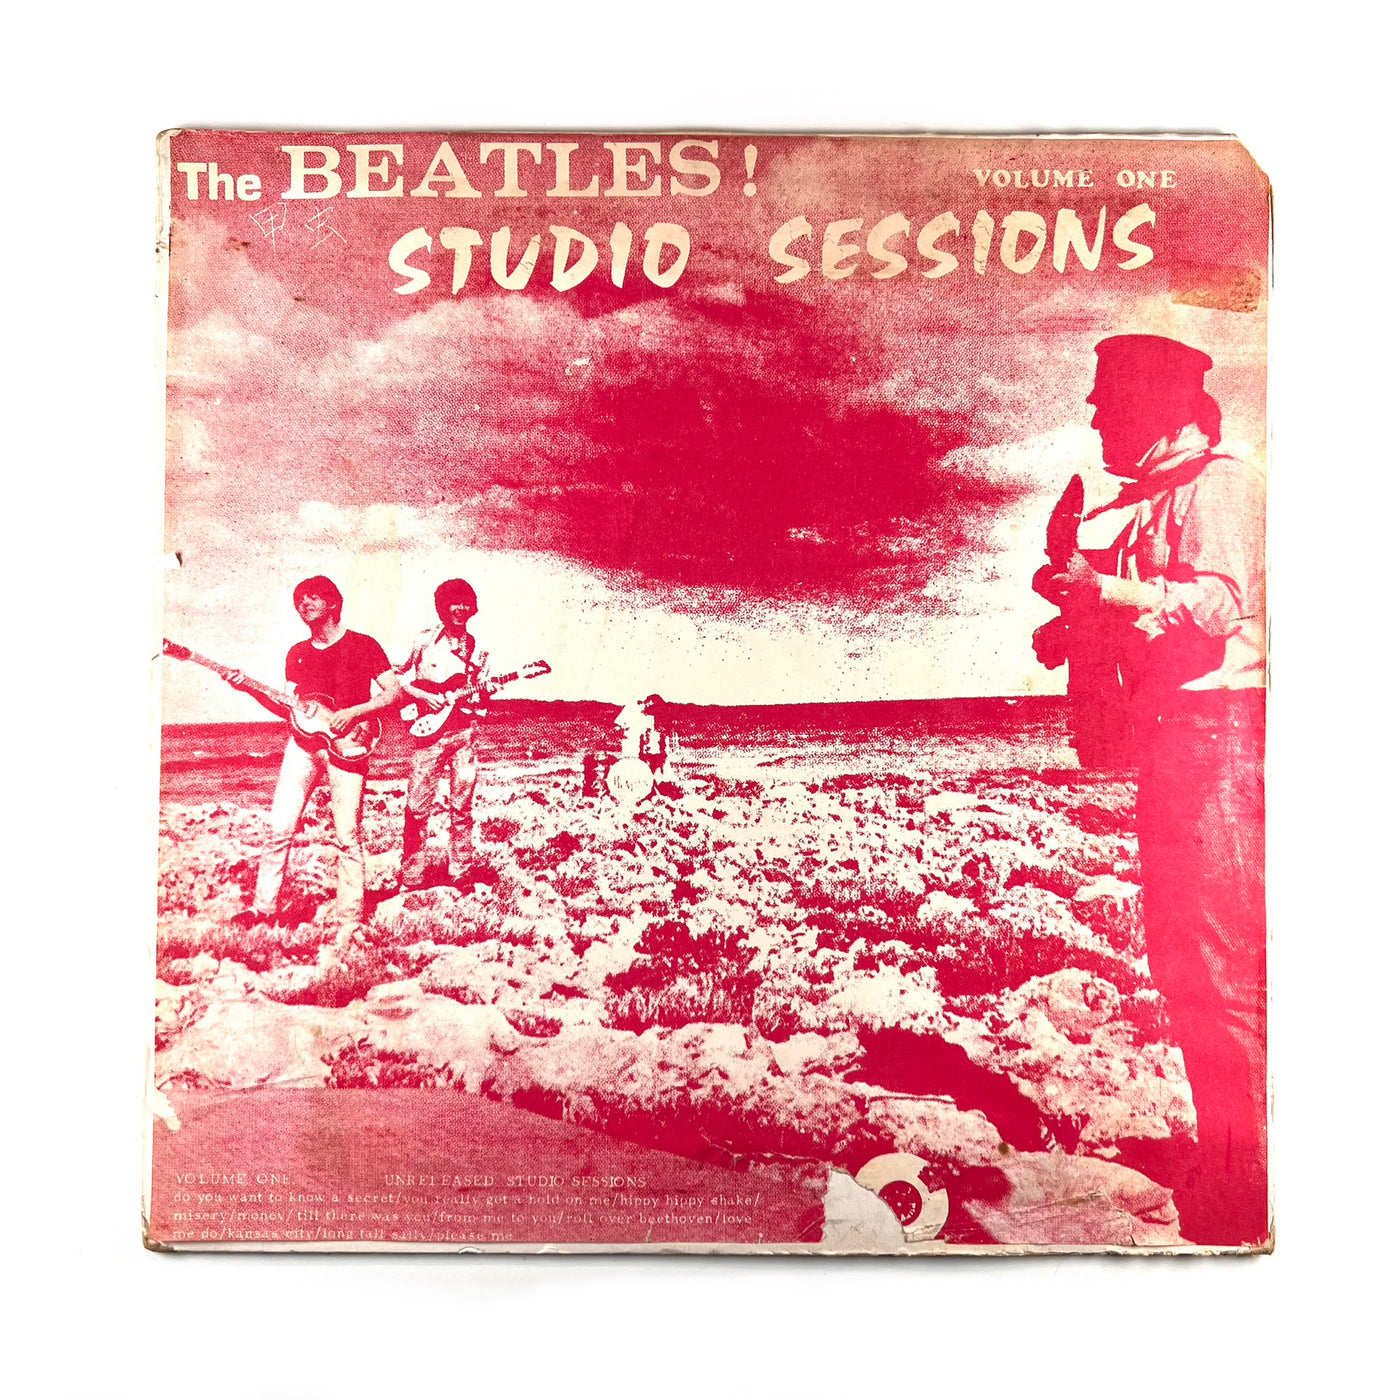 The Beatles - Studio Sessions Volume One